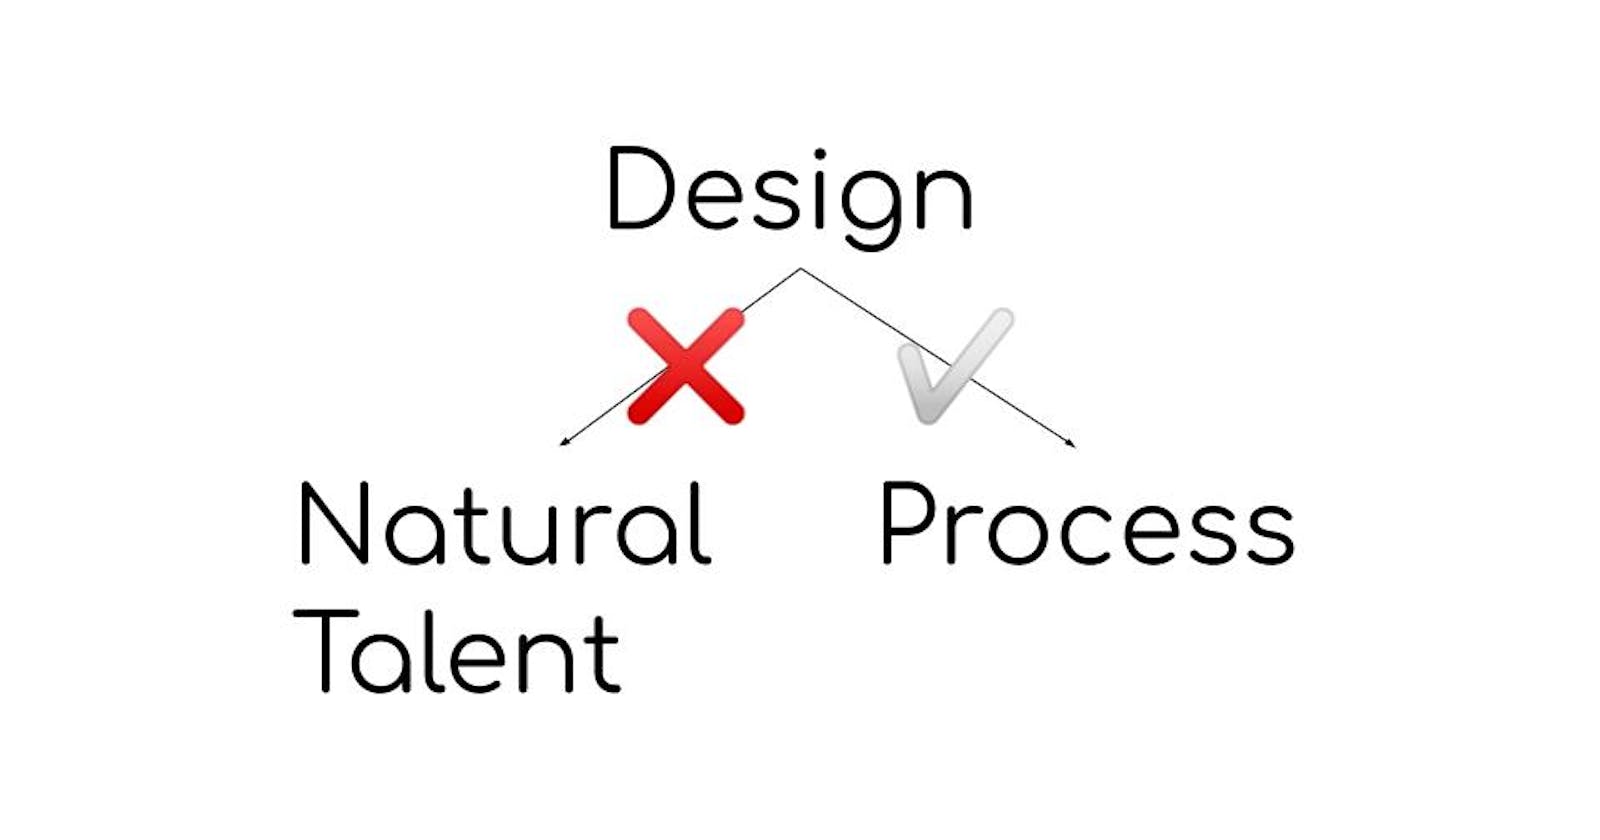 Design is a process!